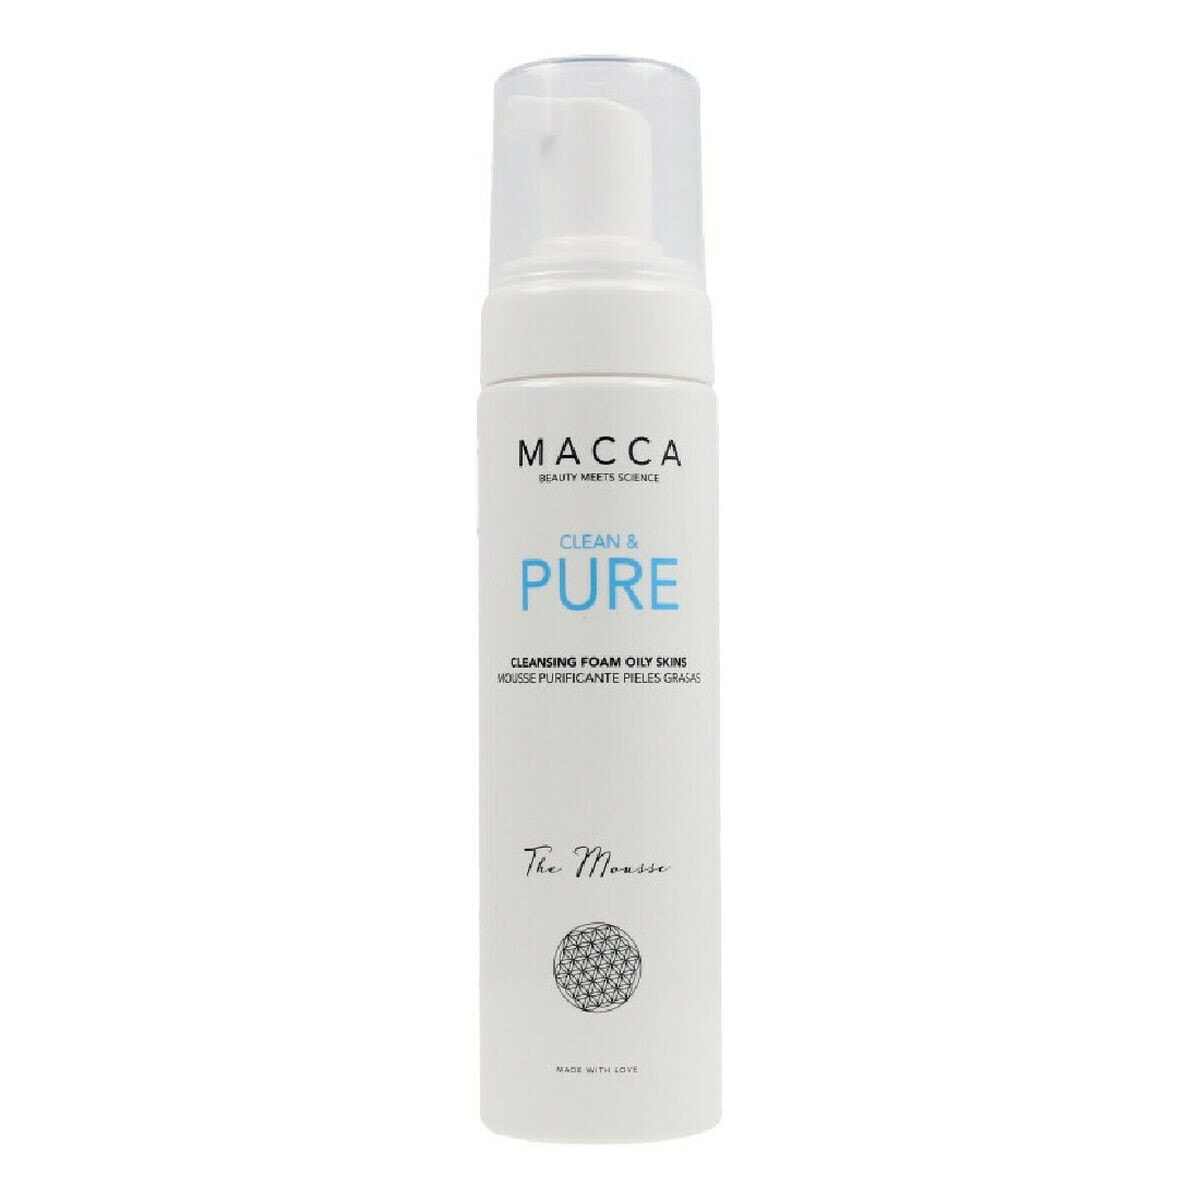 Очищающий мусс Clean & Pure Macca Clean Pure Жирная кожа 200 ml